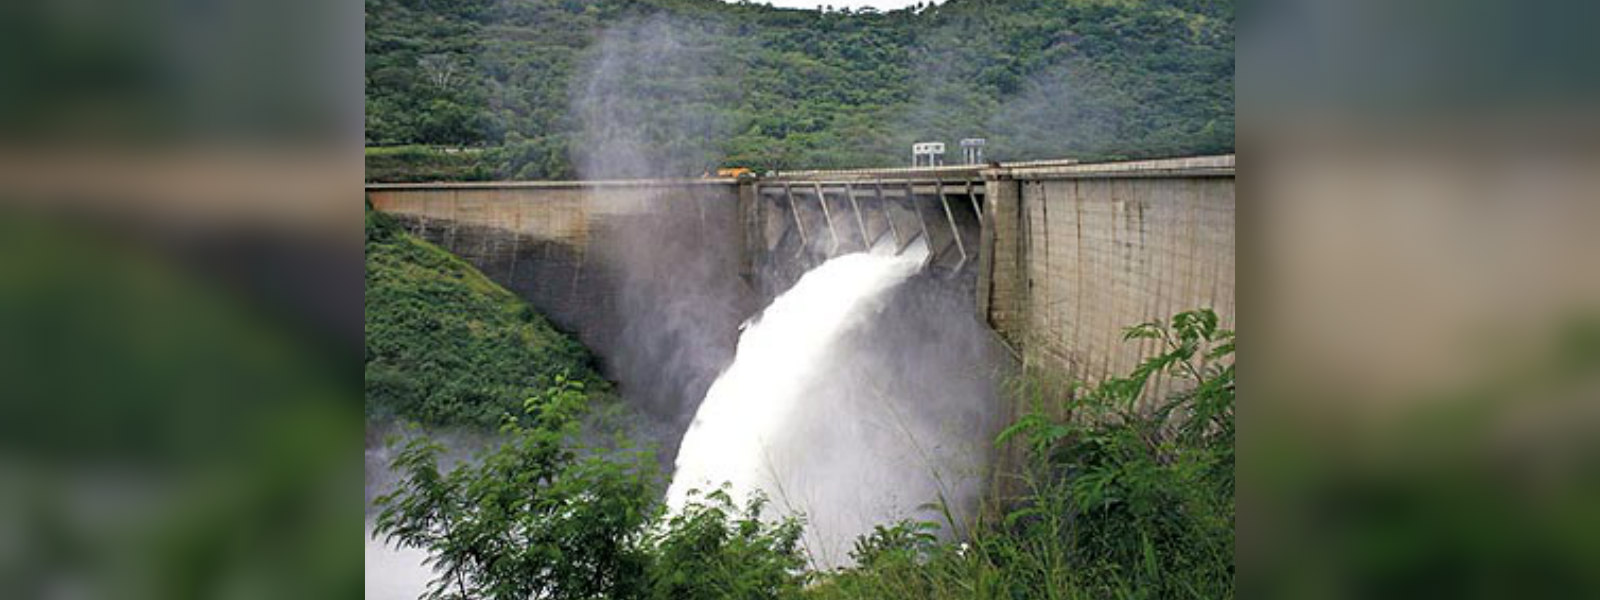 Sluice gate of Laxapana reservoir opened